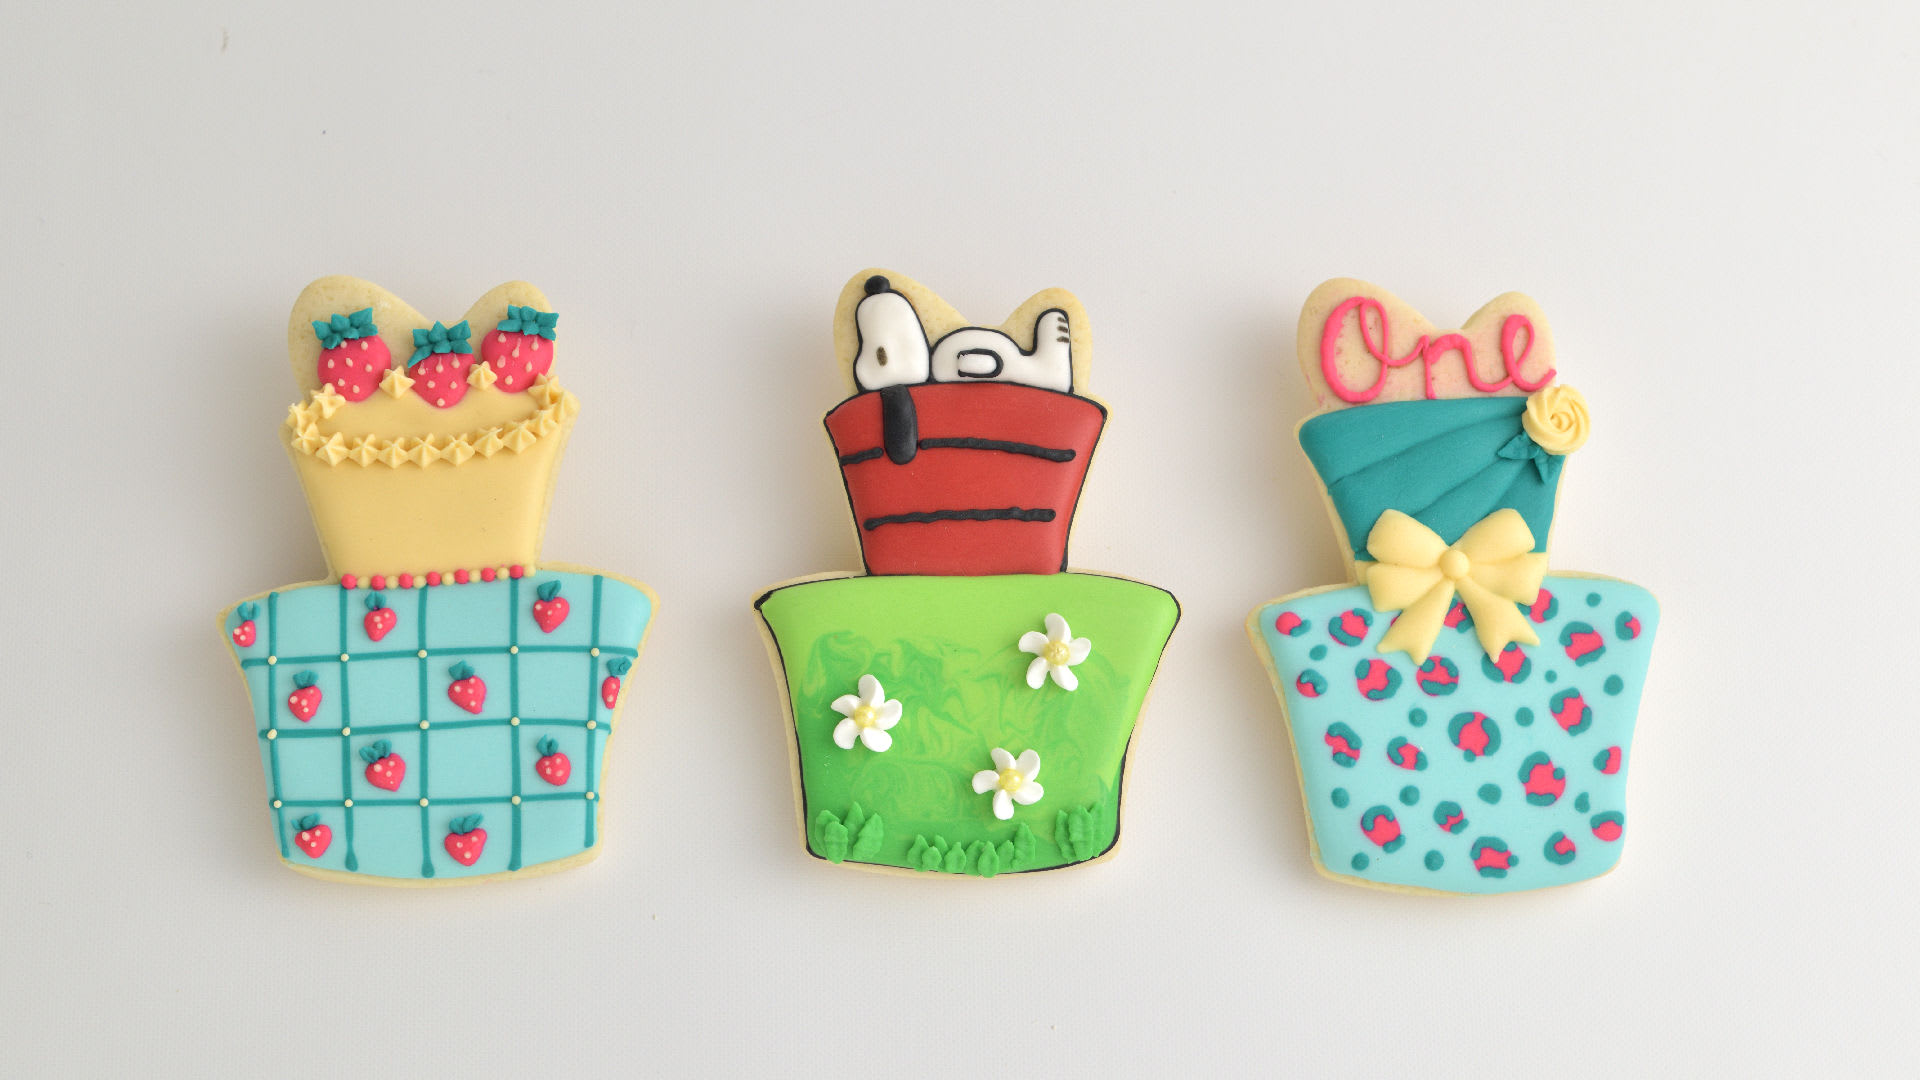 One Bowl Sponge Cake - Haniela's  Recipes, Cookie & Cake Decorating  Tutorials